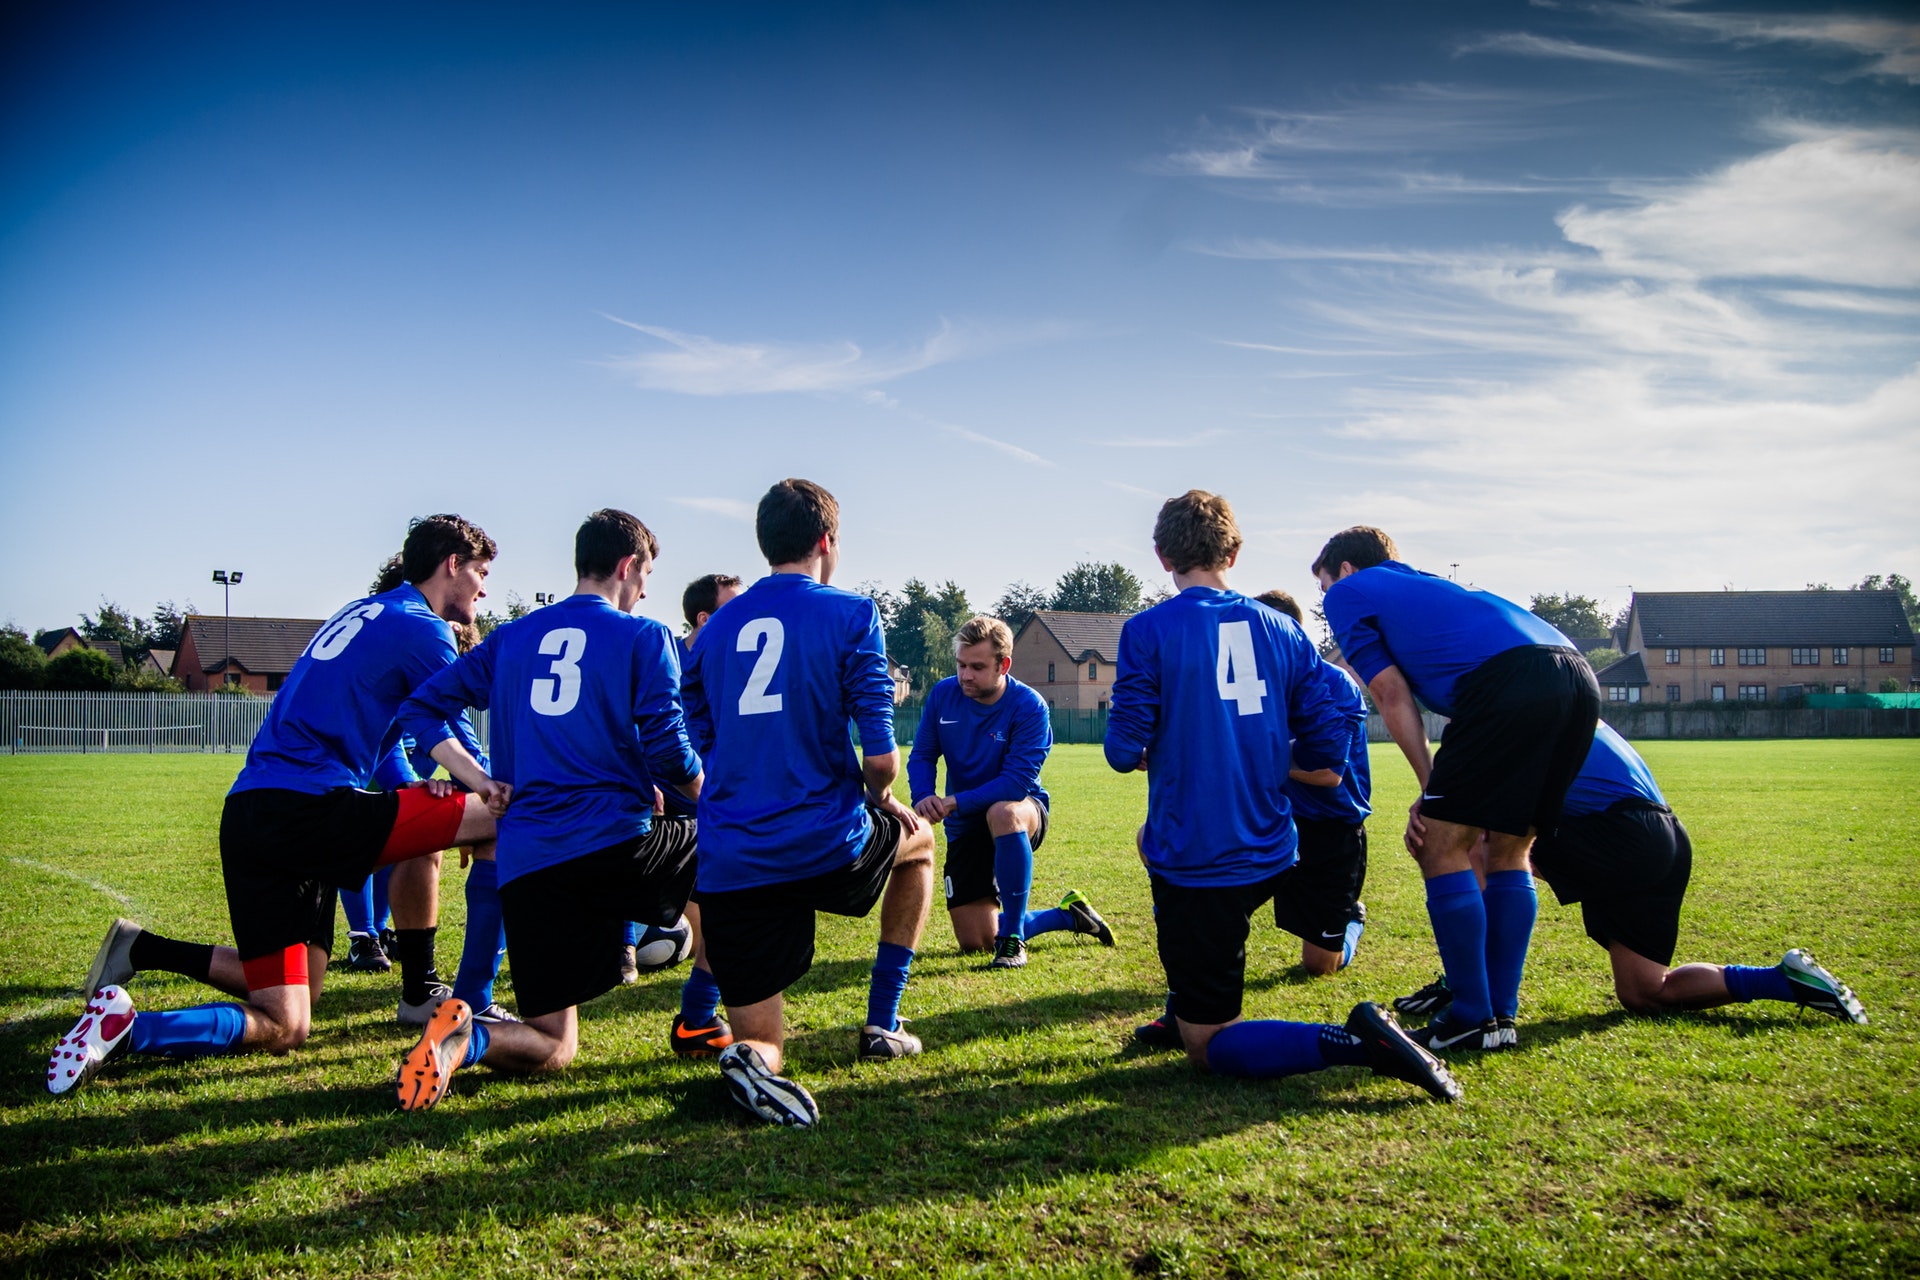 sports for teamwork and sportsmanship